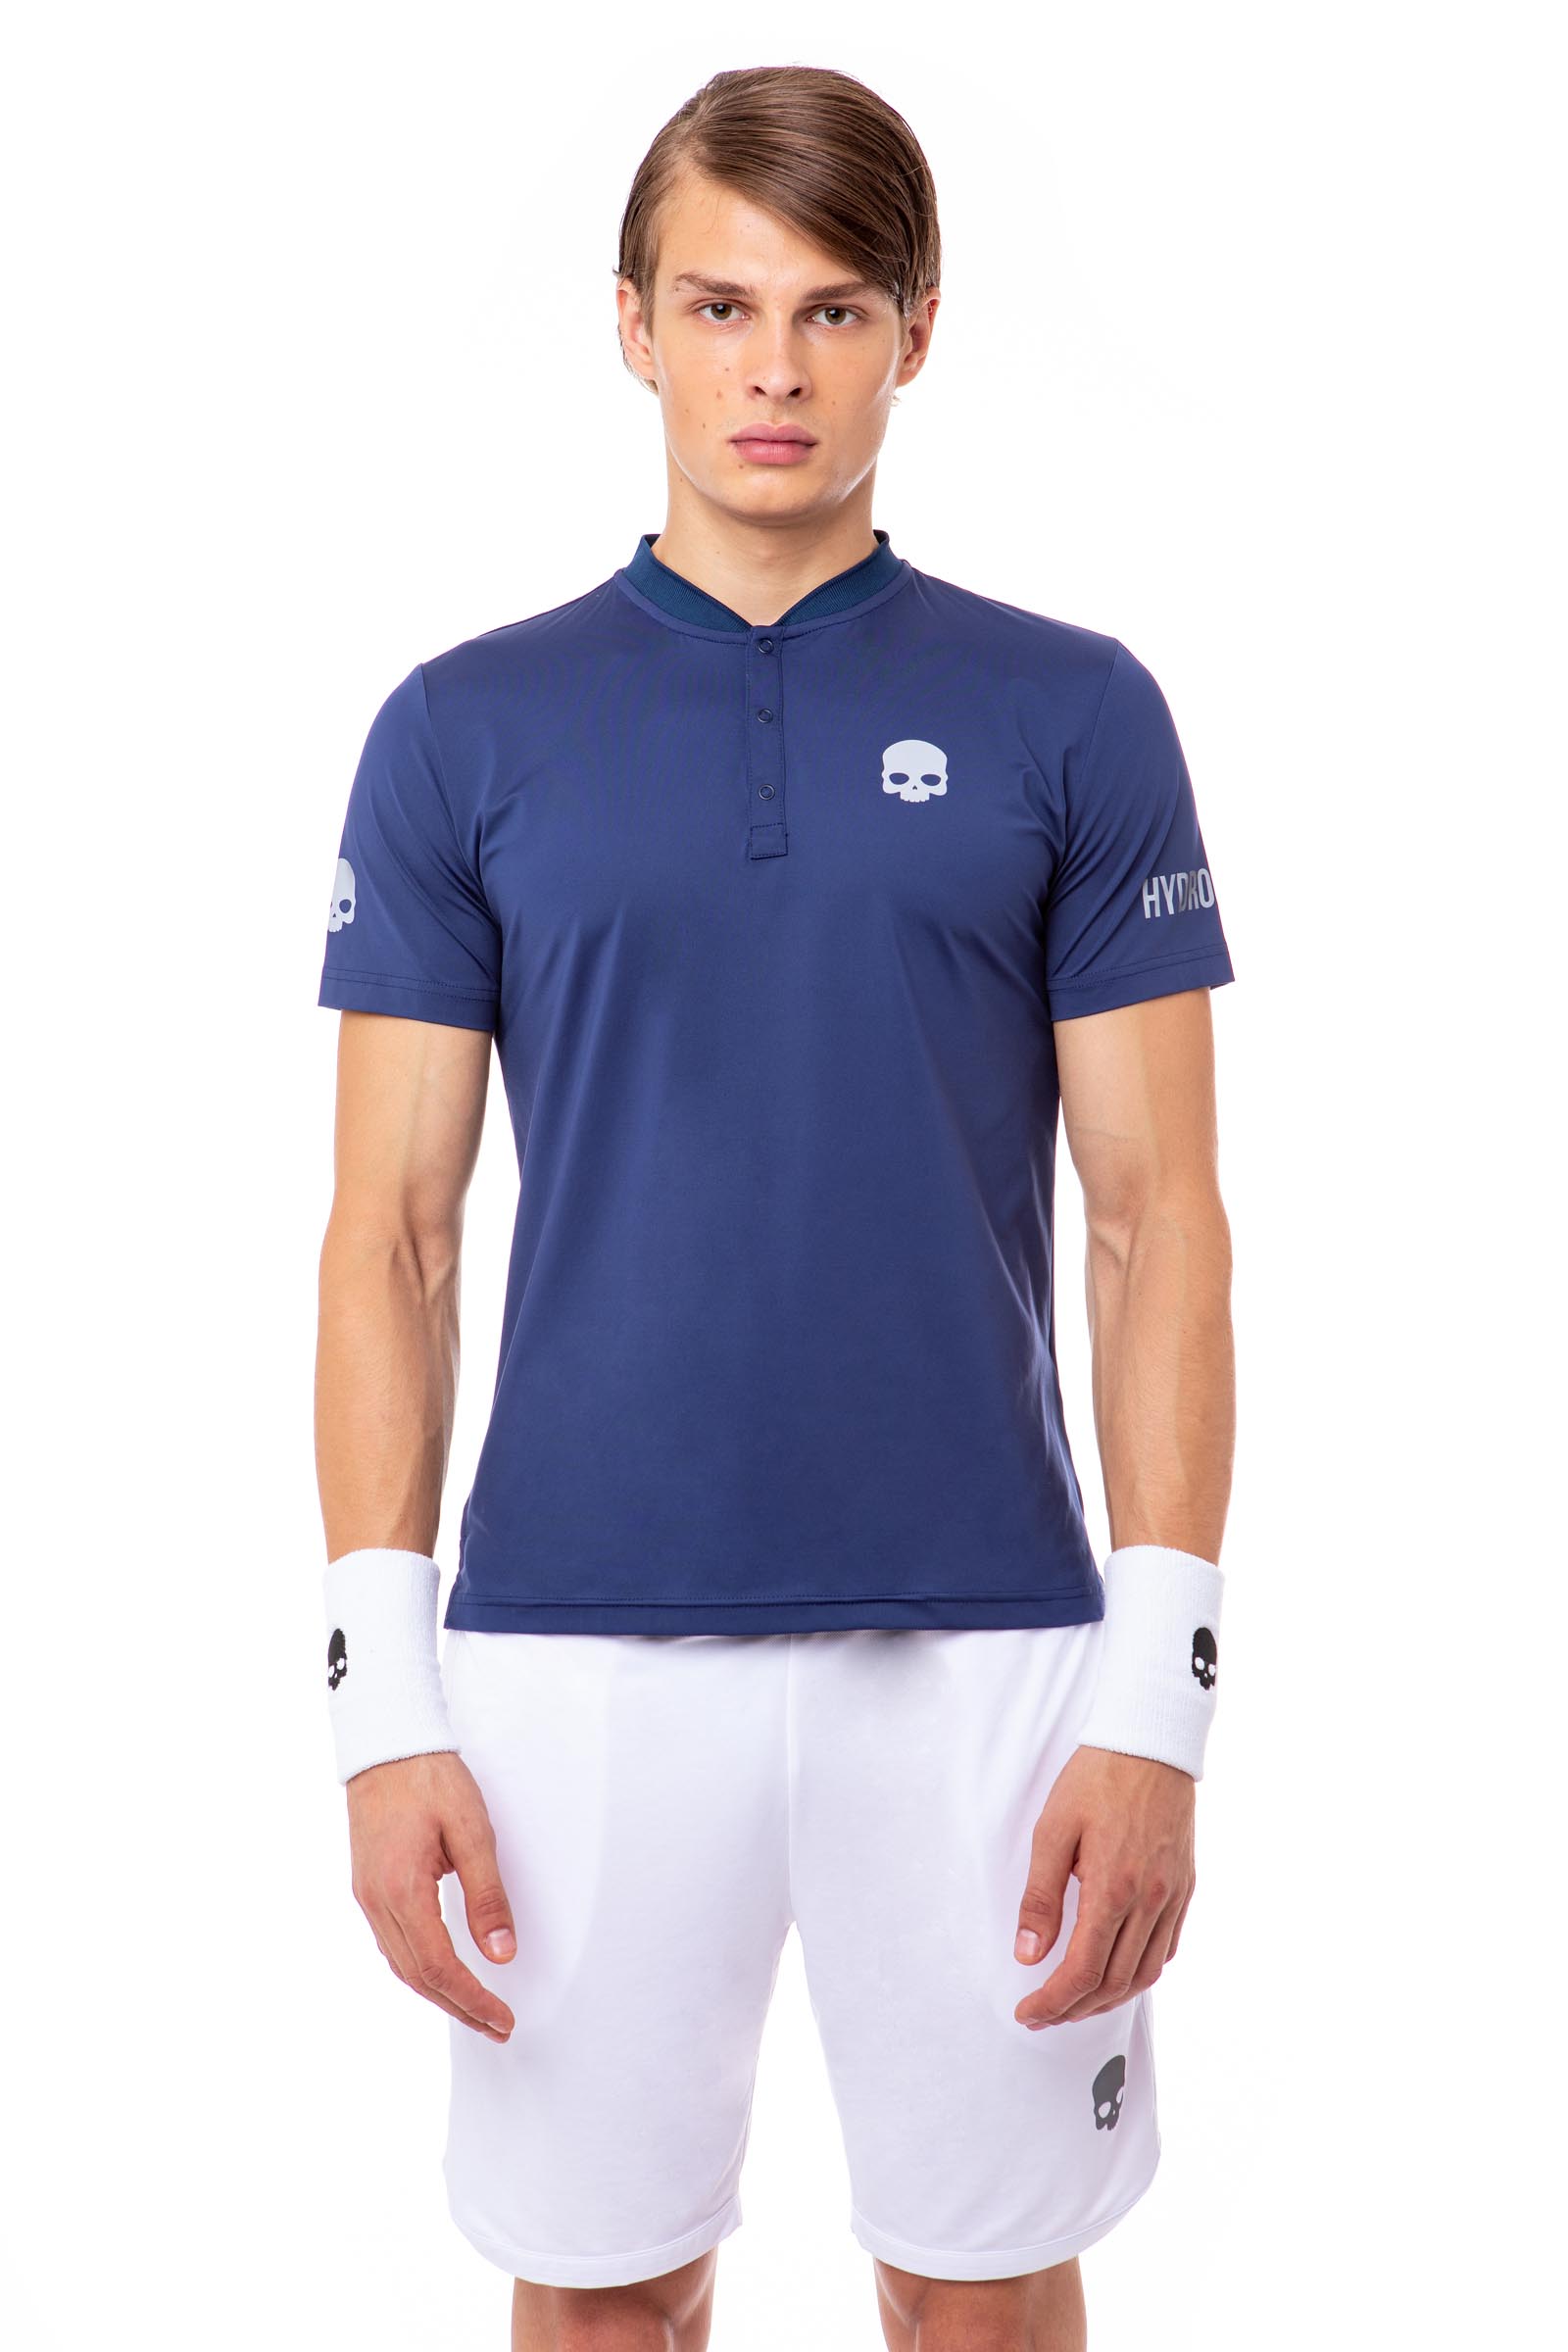 Tech Serafino - Hydrogen Tennis Clothing